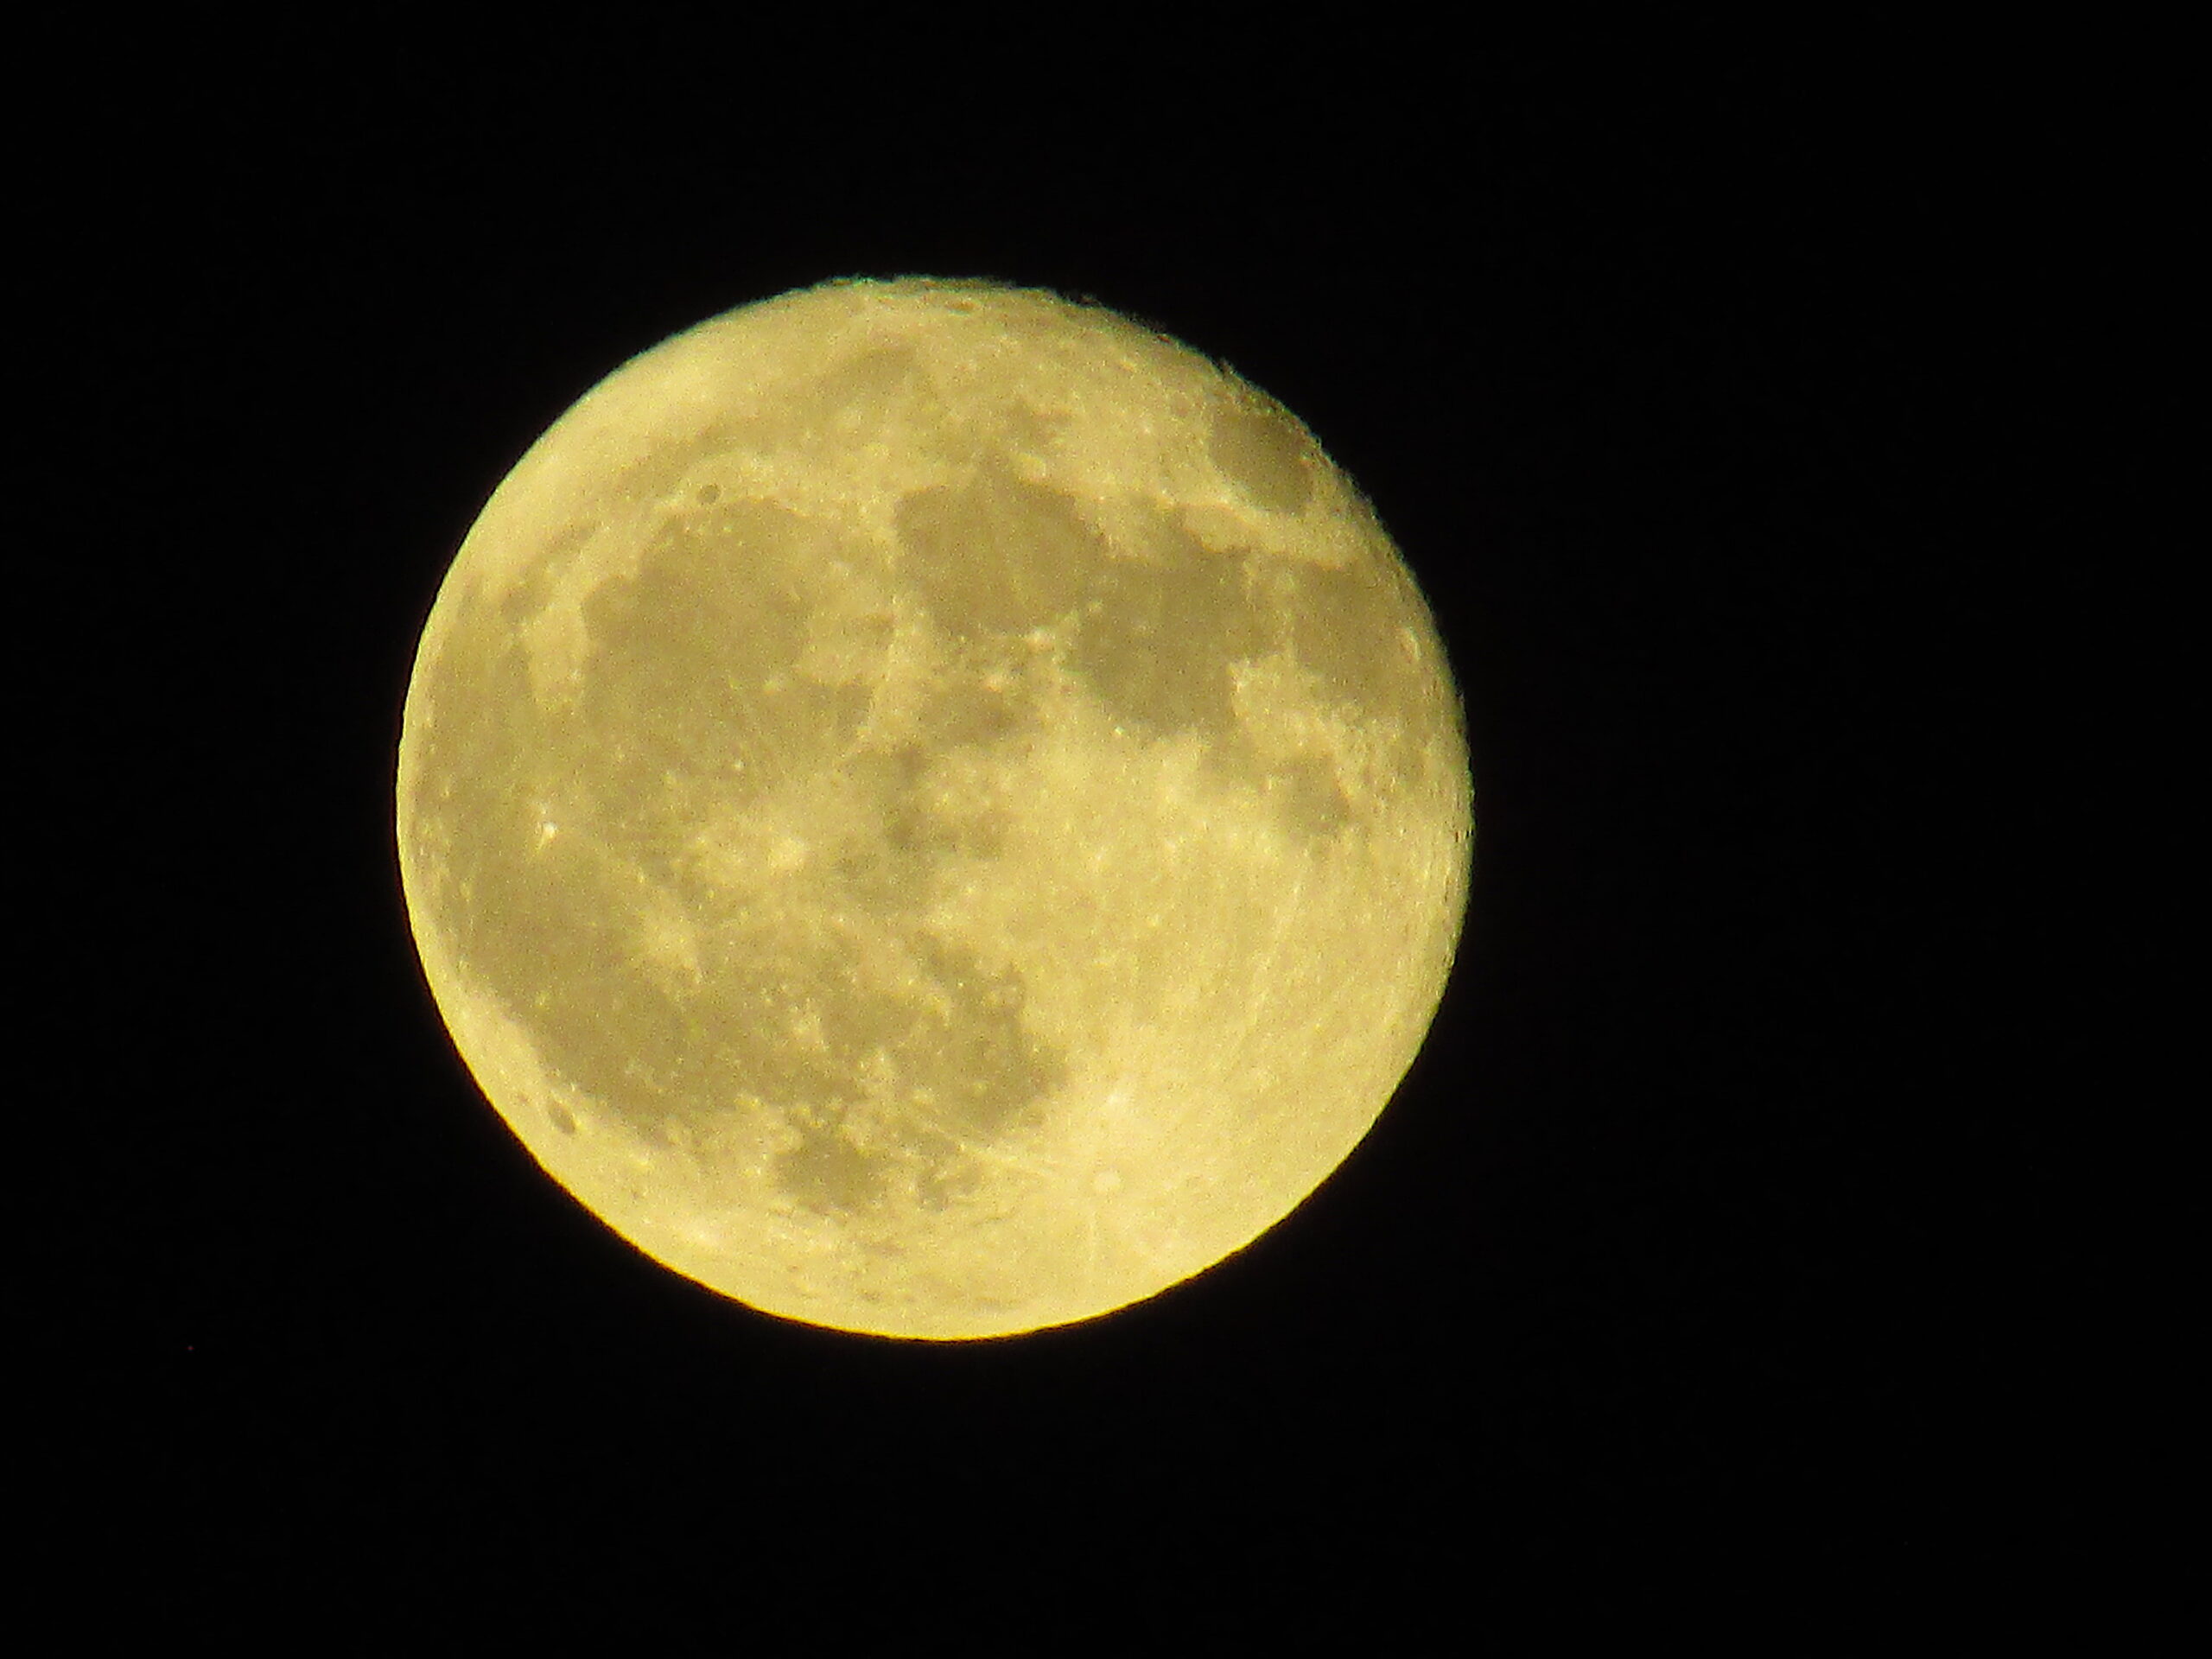 full moon; credit: Kolforn via CC BY-SA 4.0, creative commons.org.